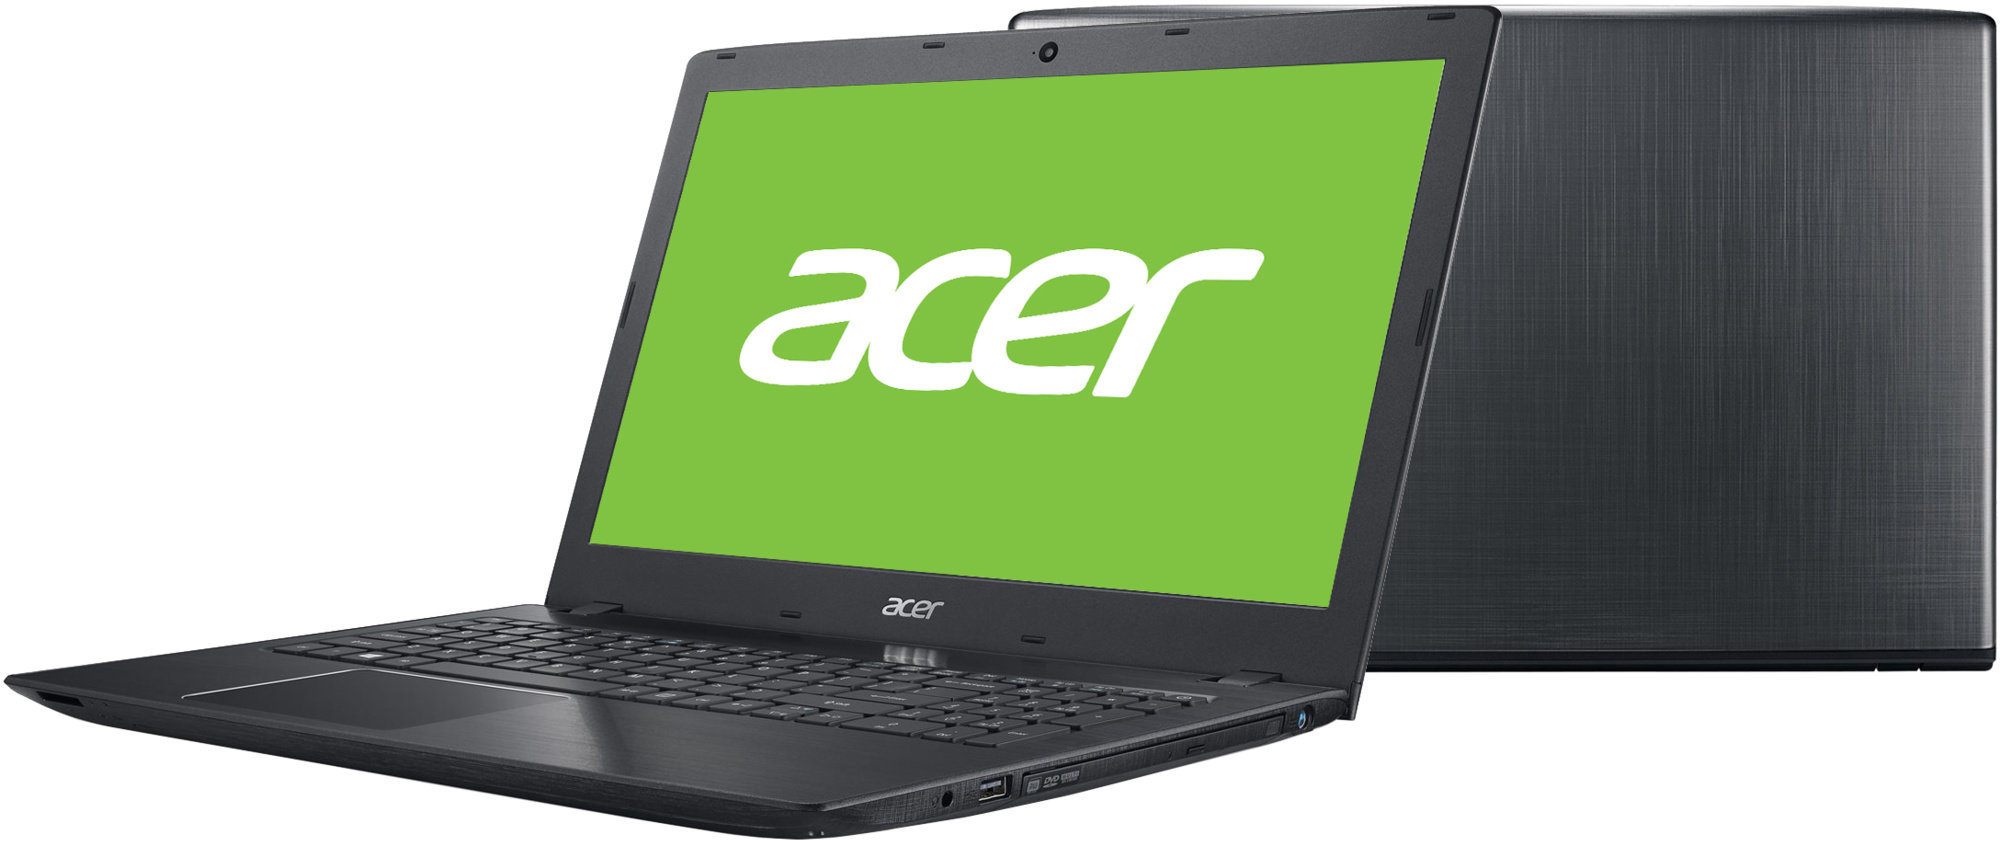 Acer a315-21g. Acer Aspire 3 a315-41g. Acer Aspire e15 e5-575g. Acer Aspire e 17. Форум аспире